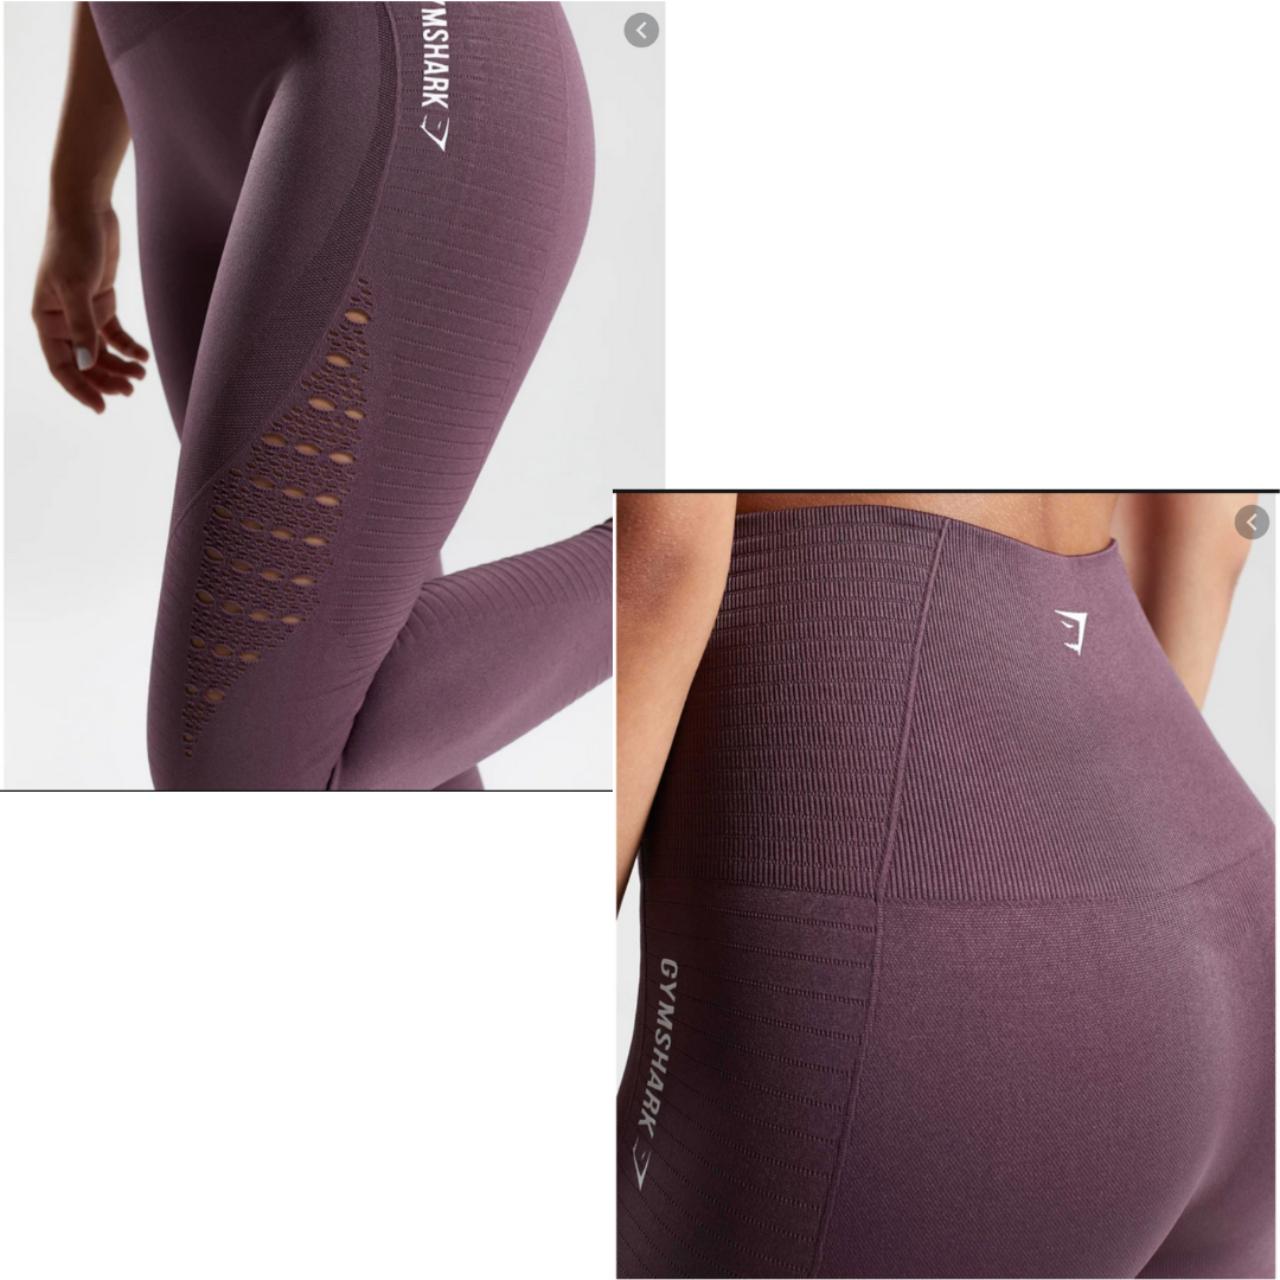 Purple gymshark energy+ seamless leggings High - Depop